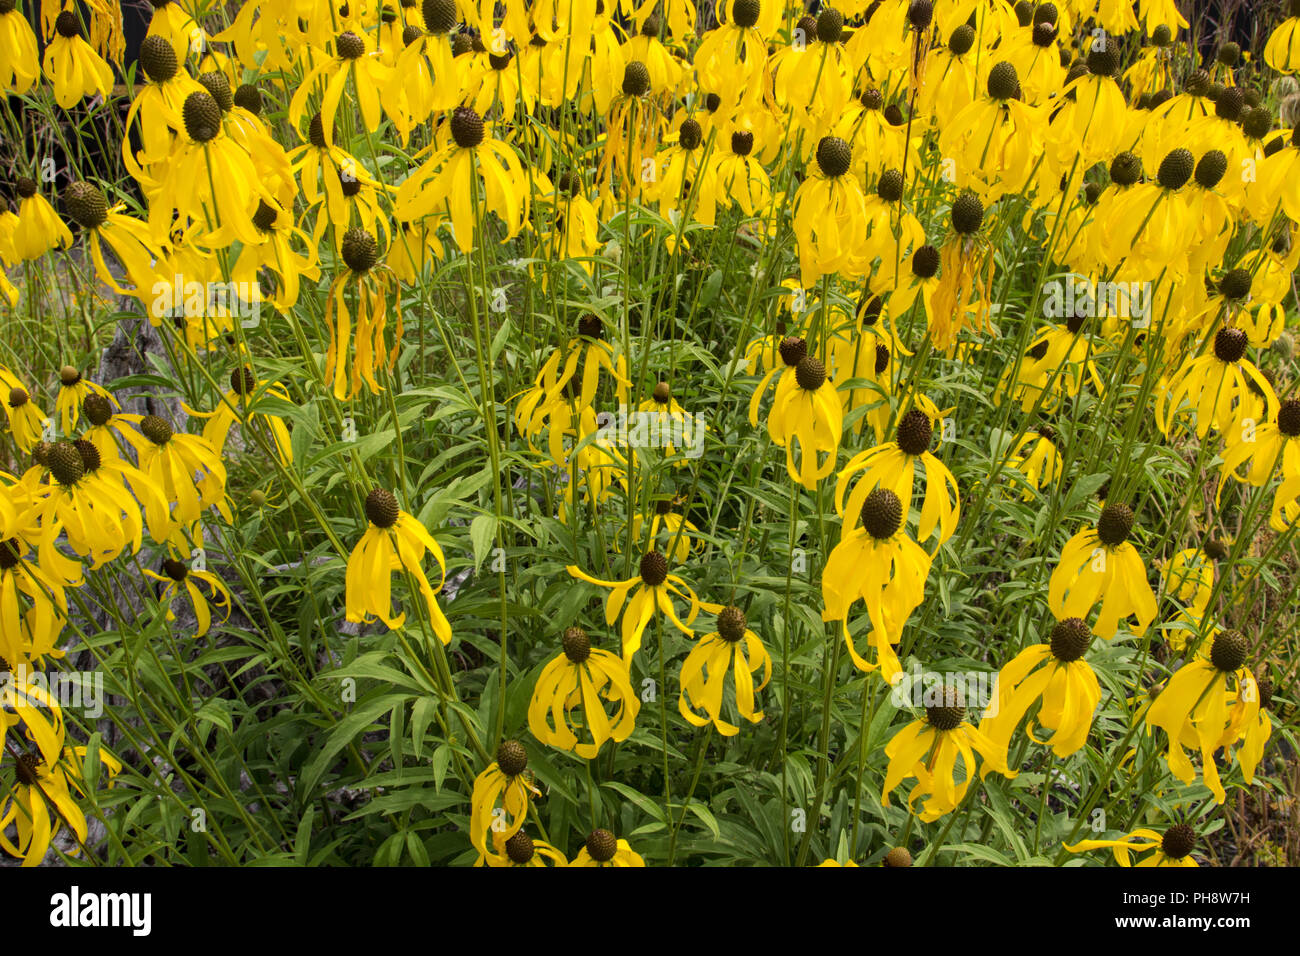 Black Eyed Susan Flower Background. Group of Black Eyed Susans perennials in a summer flower garden. Stock Photo